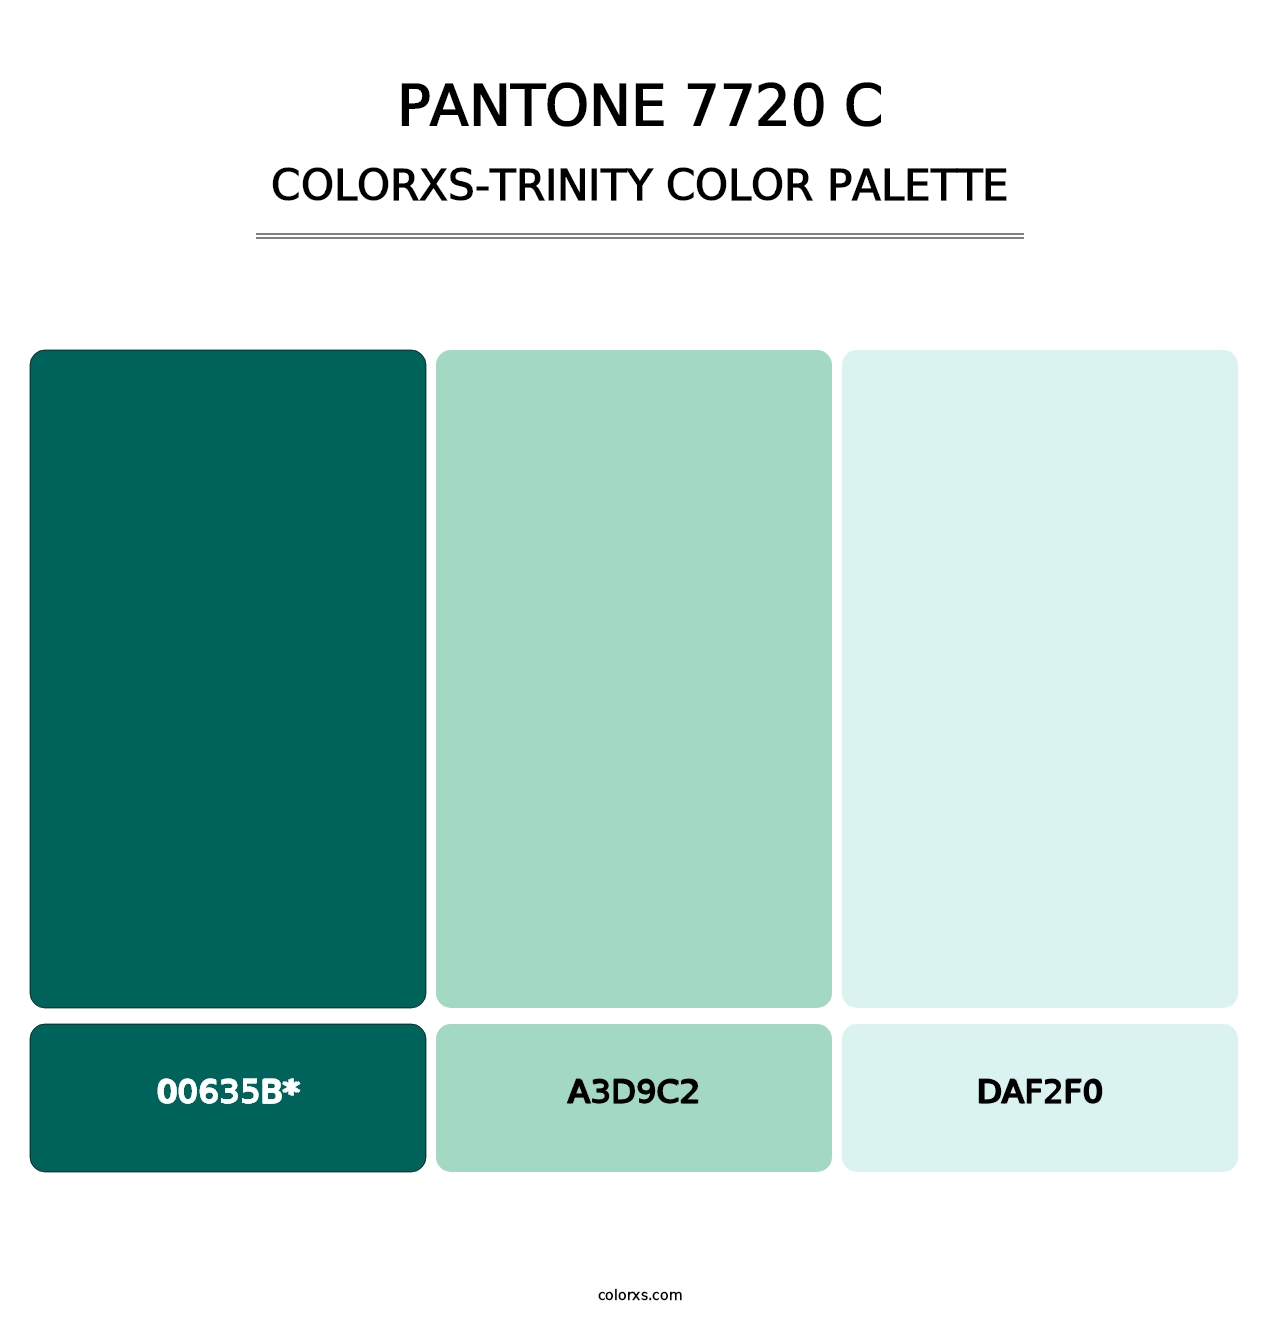 PANTONE 7720 C - Colorxs Trinity Palette